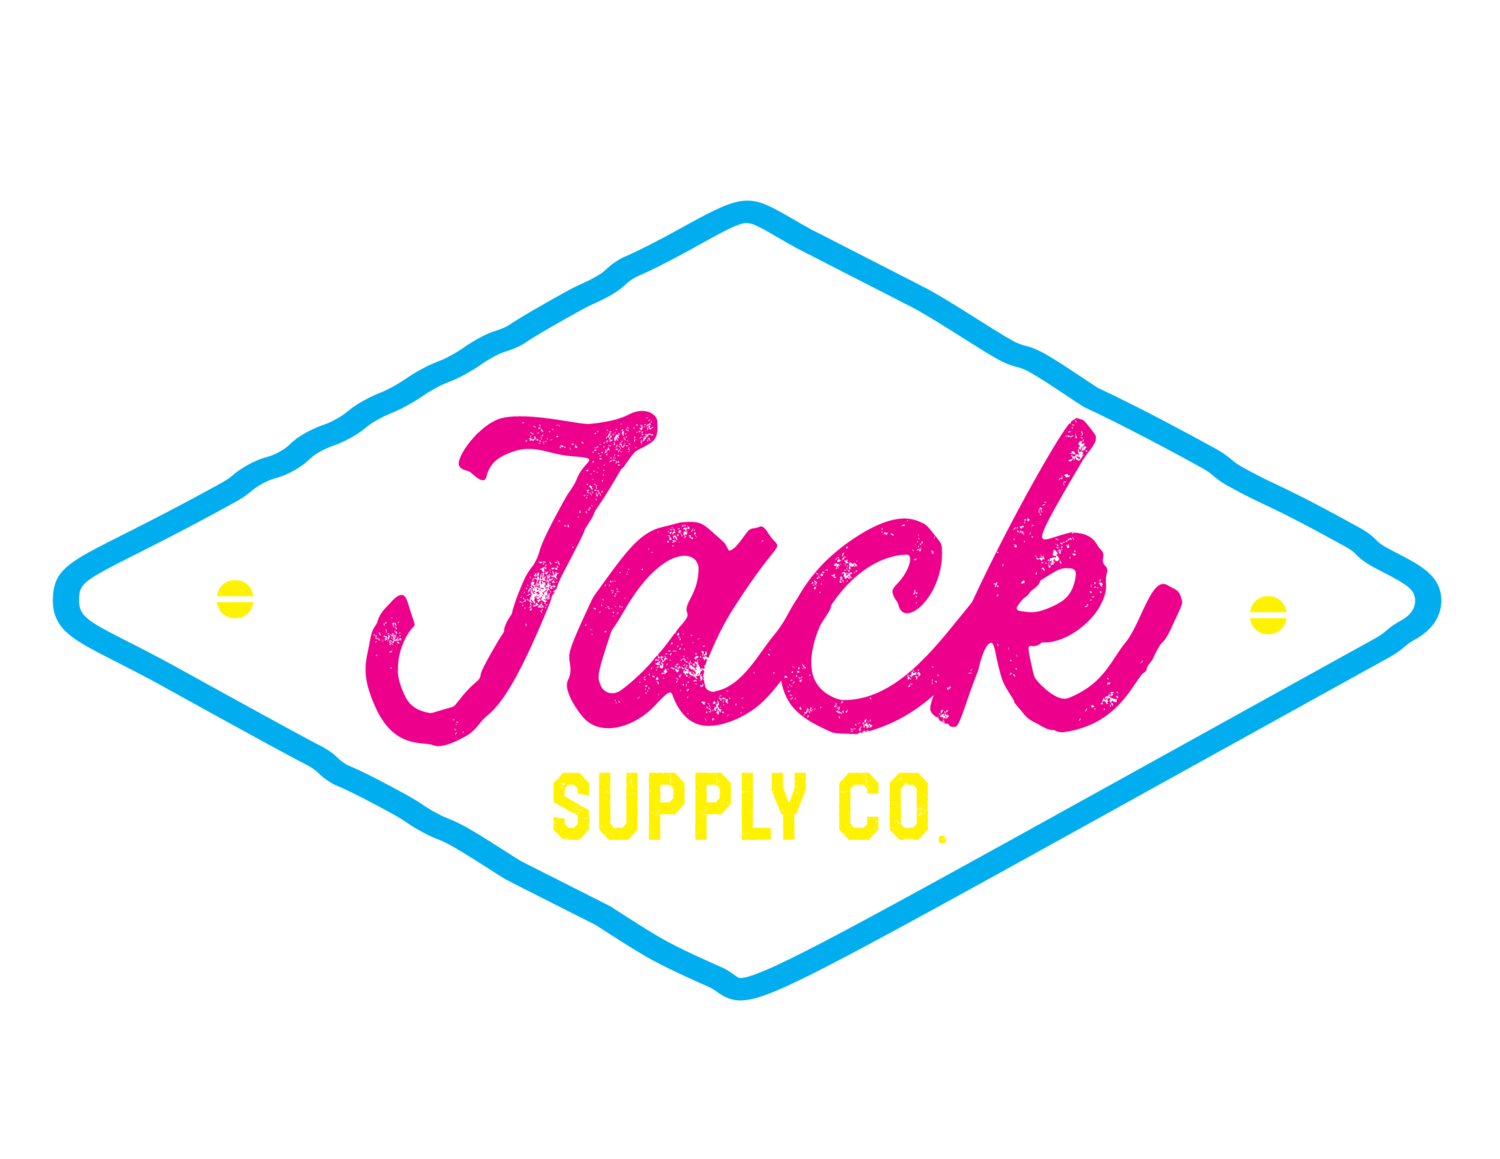 Jack Supply Co.